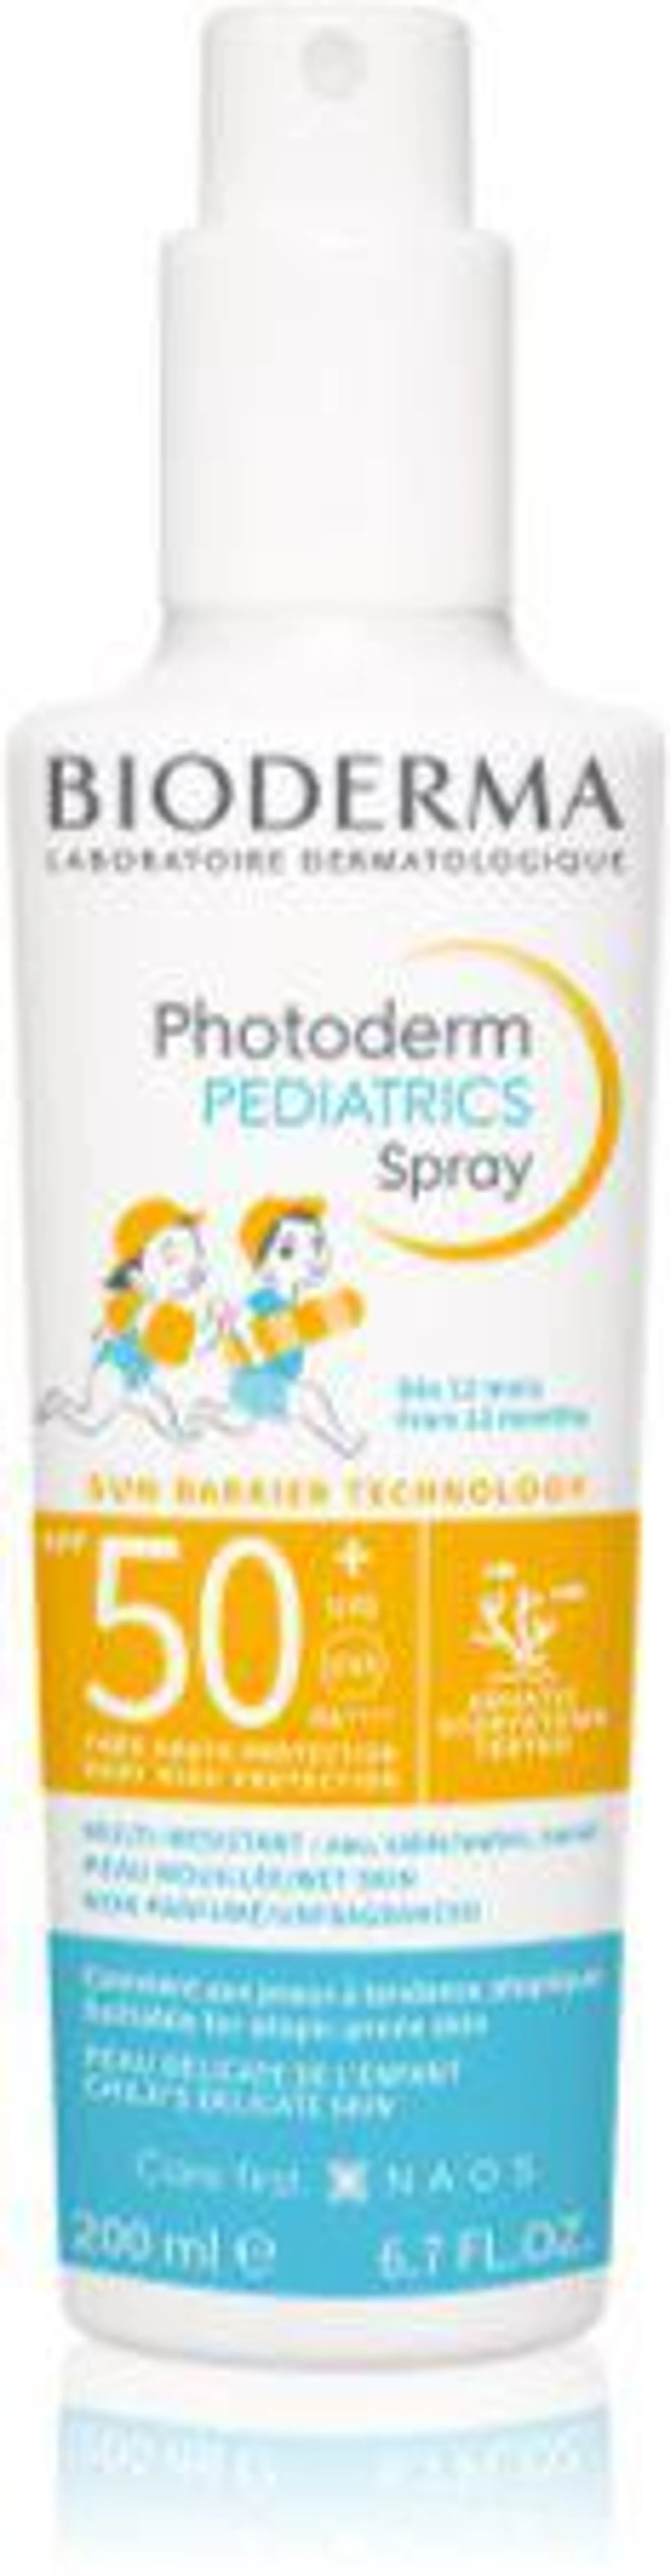 Bioderma Photoderm Pediatrics